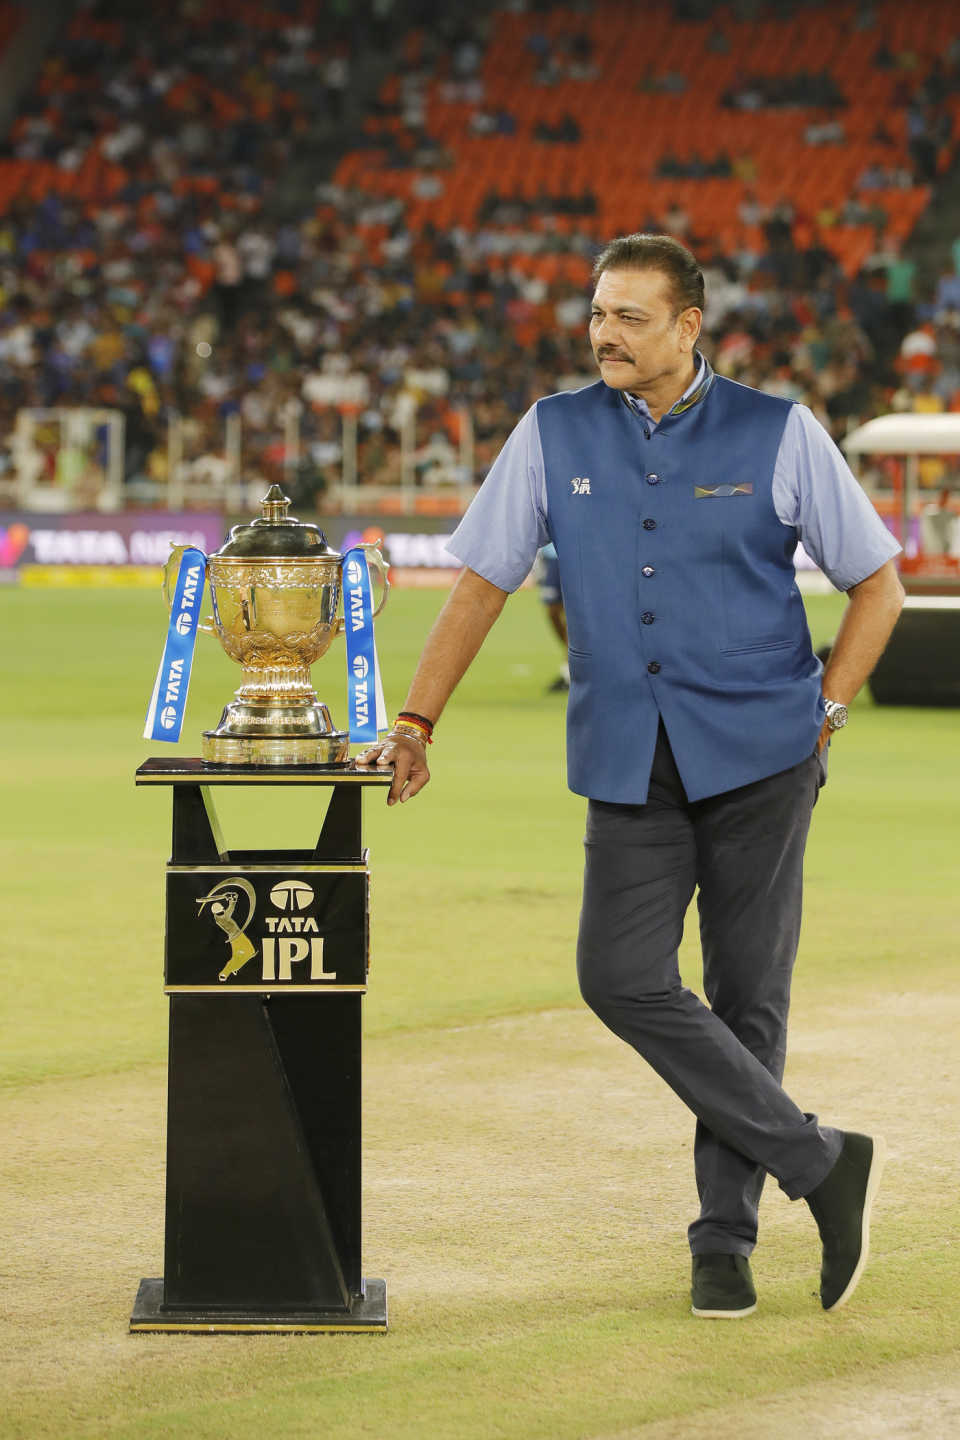 Ravi Shastri strikes a pose with the IPL trophy